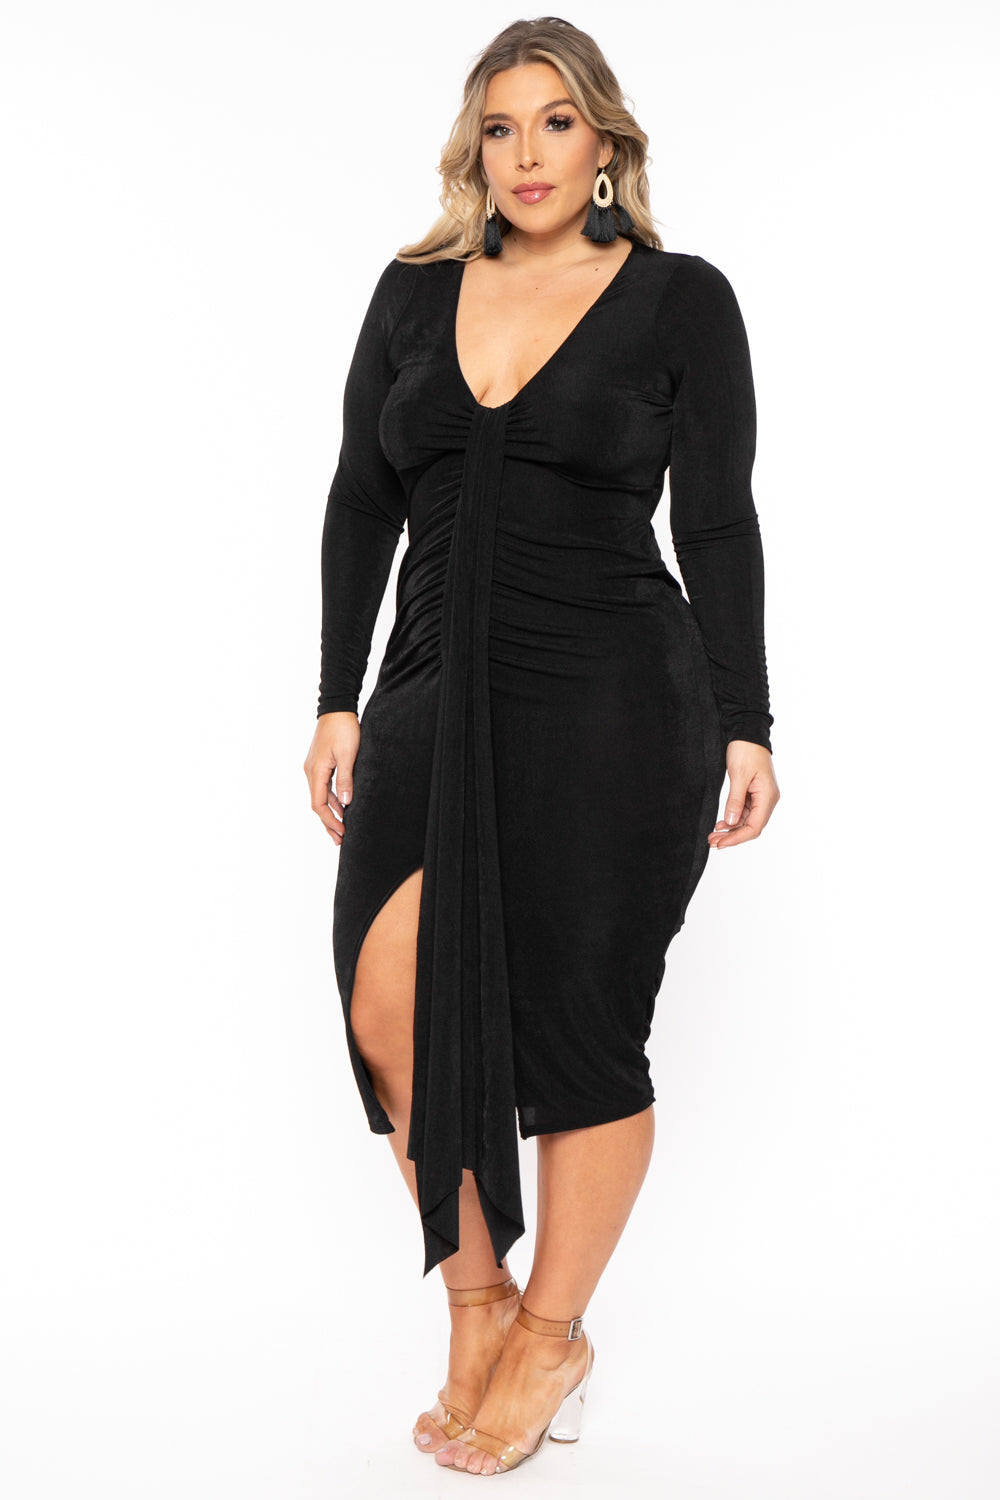 Curvy Sense Dresses Plus Size Solara Slinky Midi Dress - Black